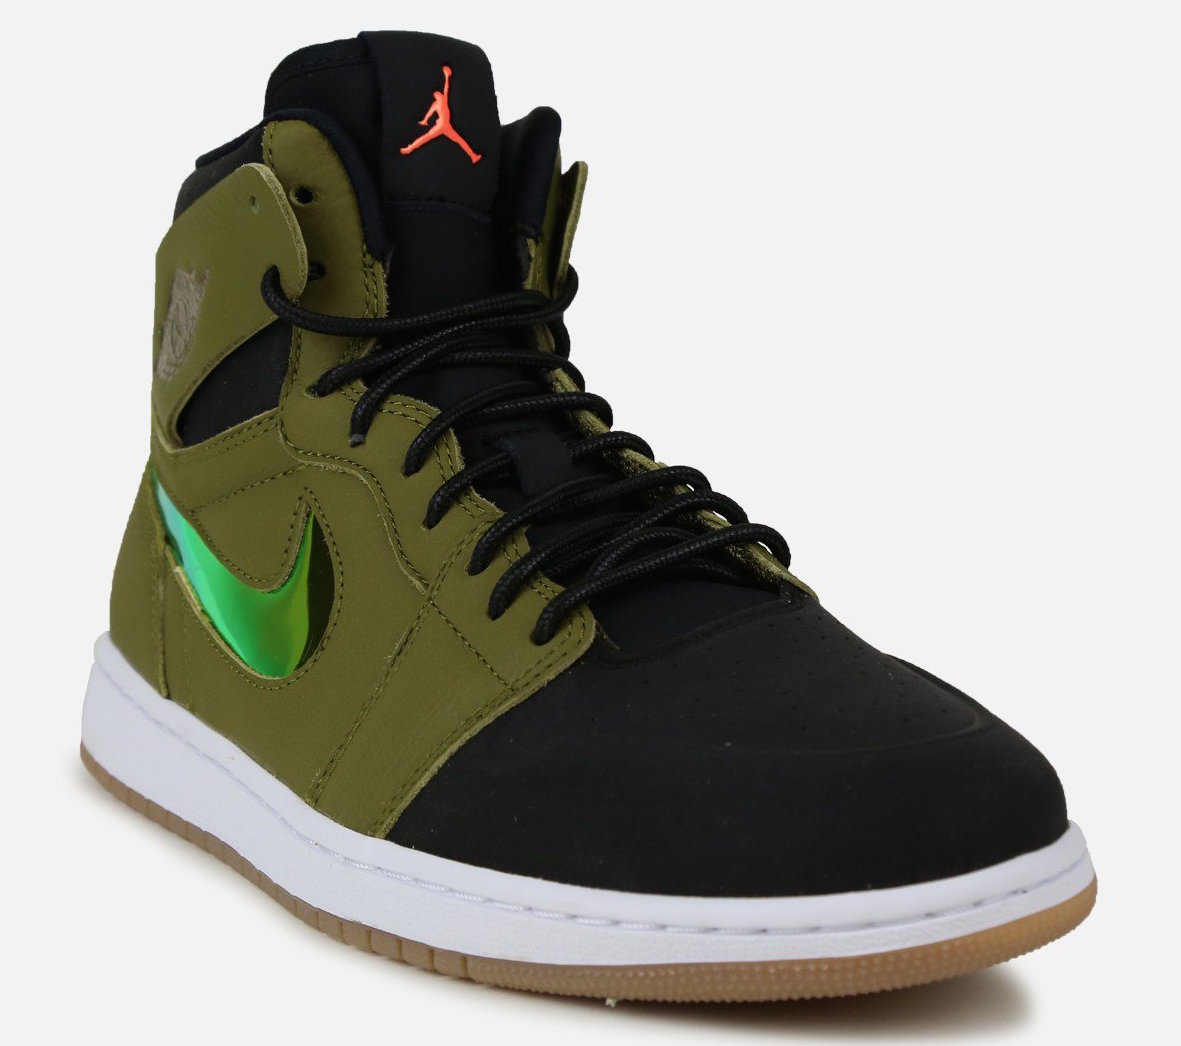 Air Jordan 1 Nouveau Militia Green - Sneaker Bar Detroit